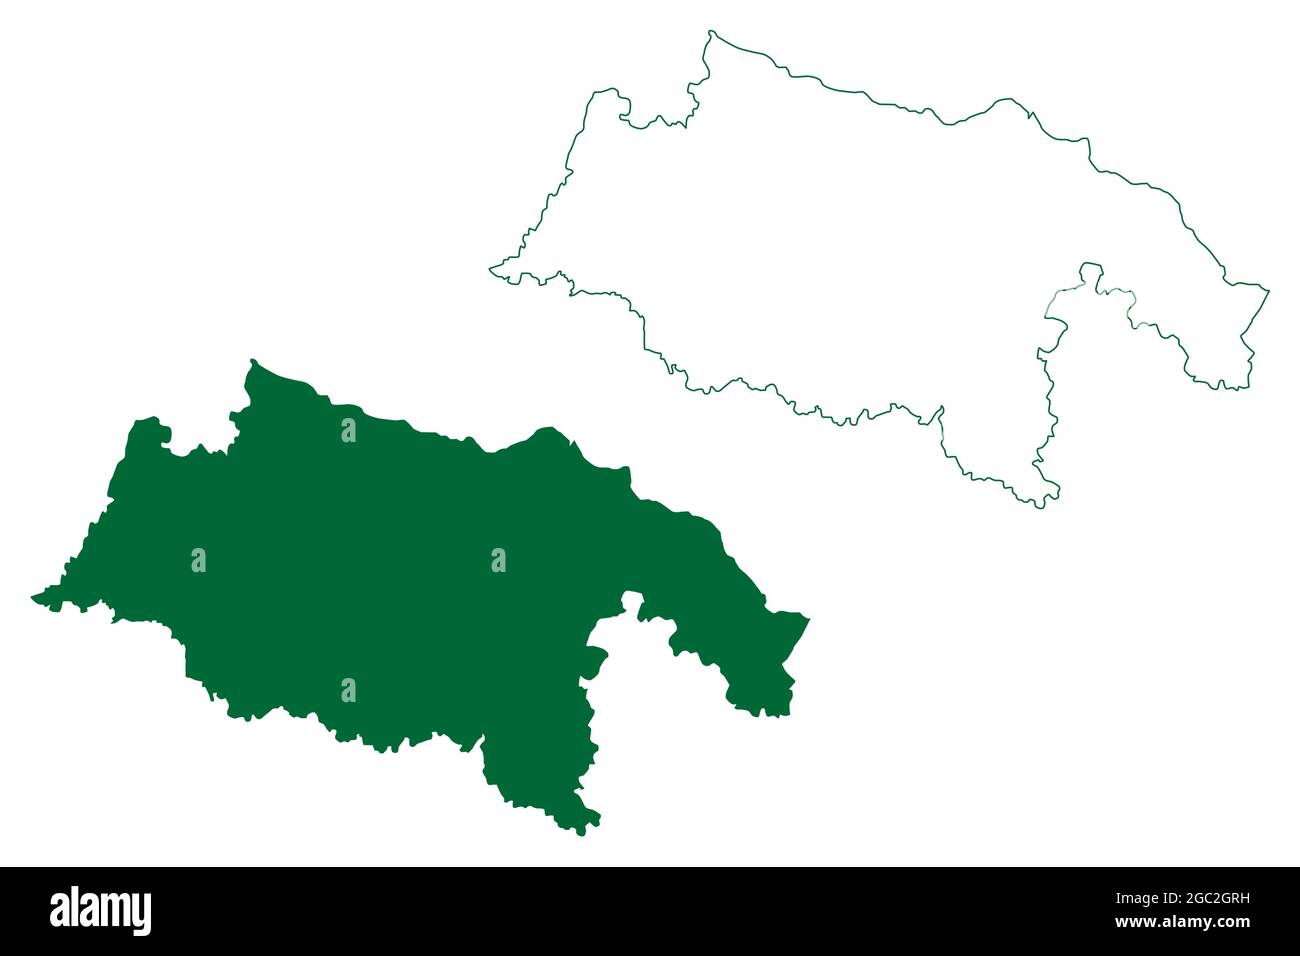 Ambedkar Nagar District Uttar Pradesh State Republic Of India Map Vector Illustration Scribble Sketch Ambedkar Nagar Map 2GC2GRH 